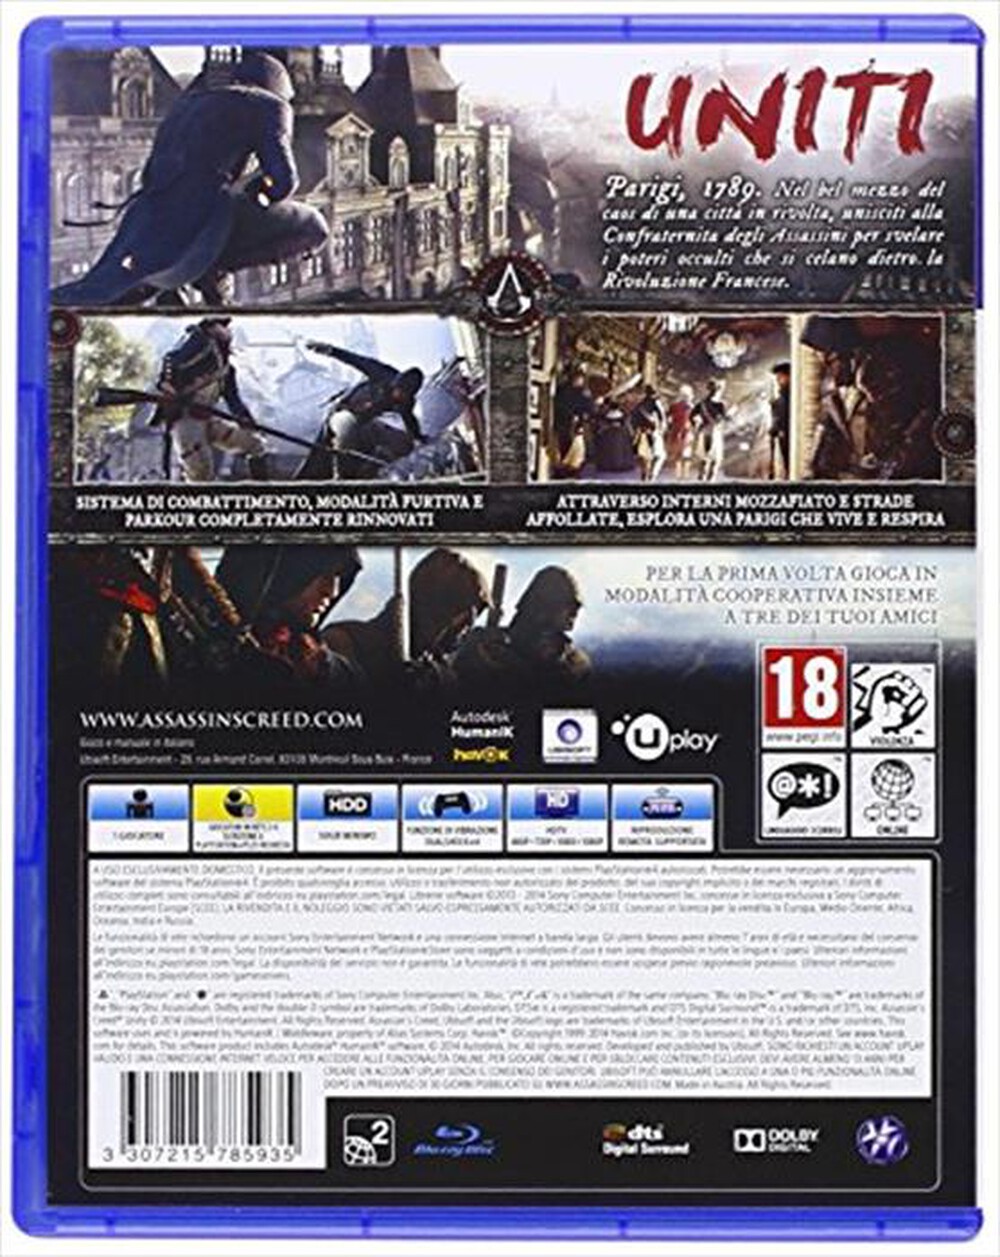 "UBISOFT - Assassins Creed Unity Ps4"